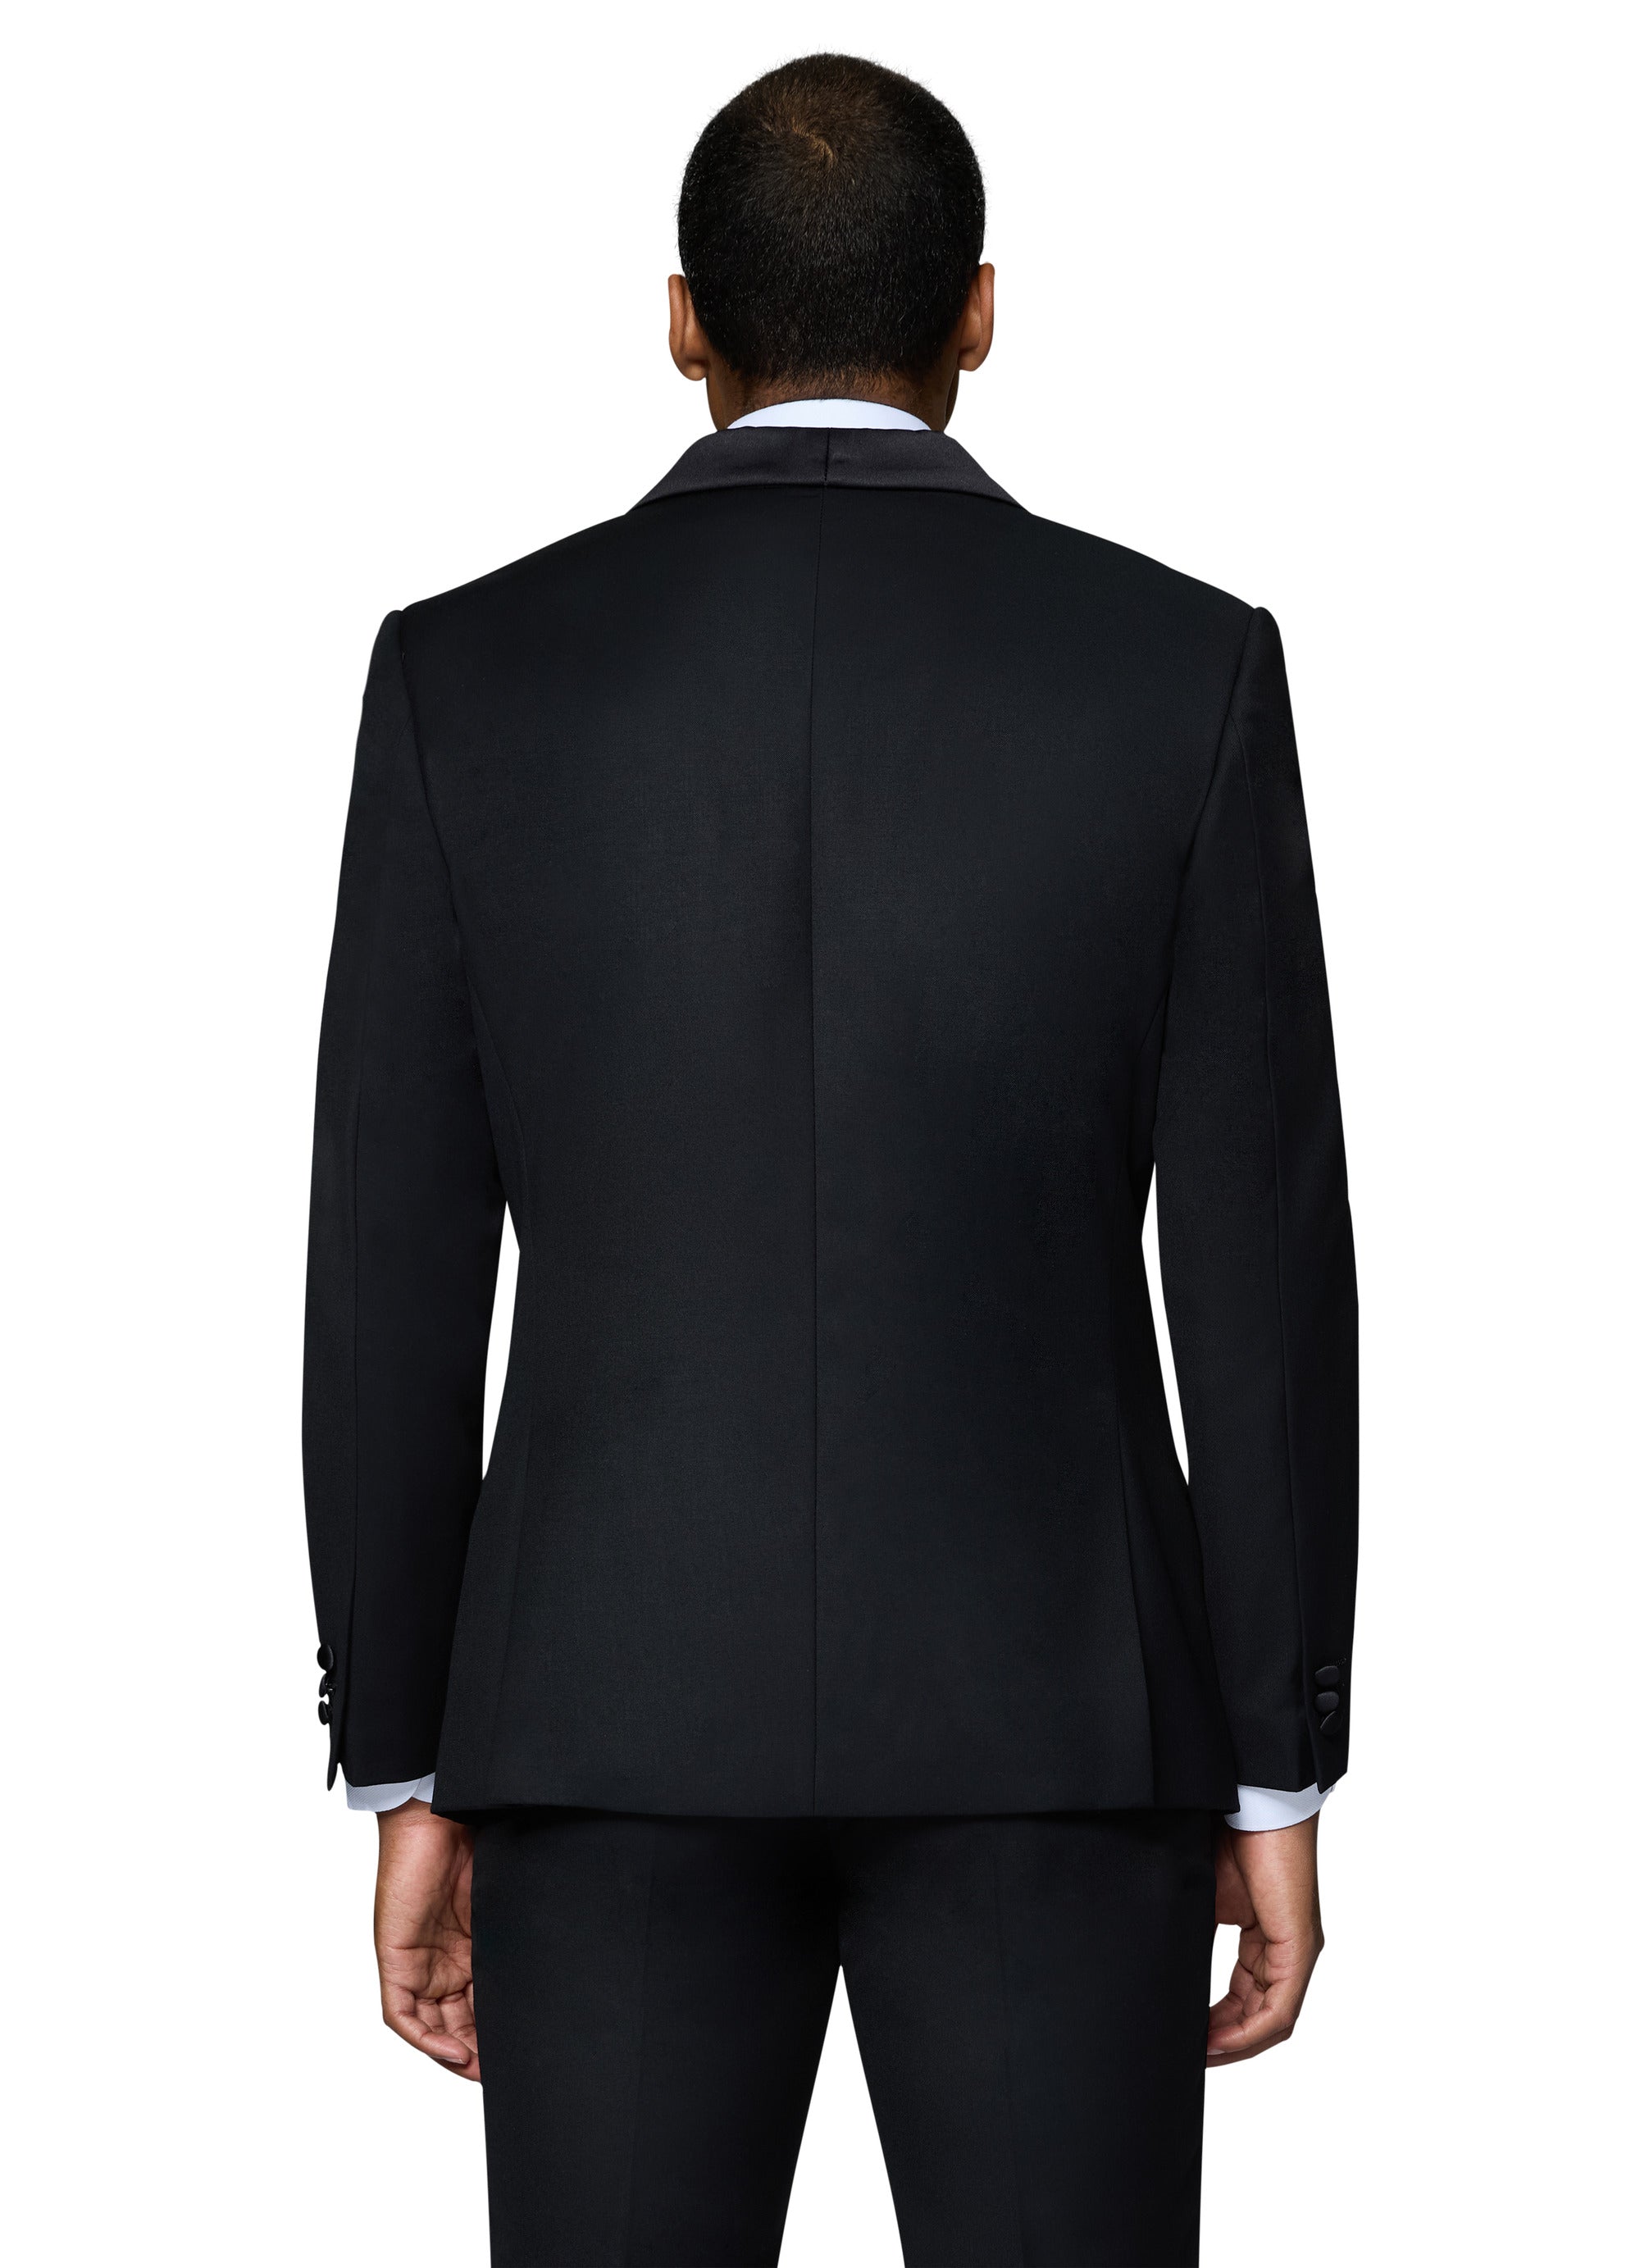 Berragamo Solid Black Shawl Tuxedo Slim Fit